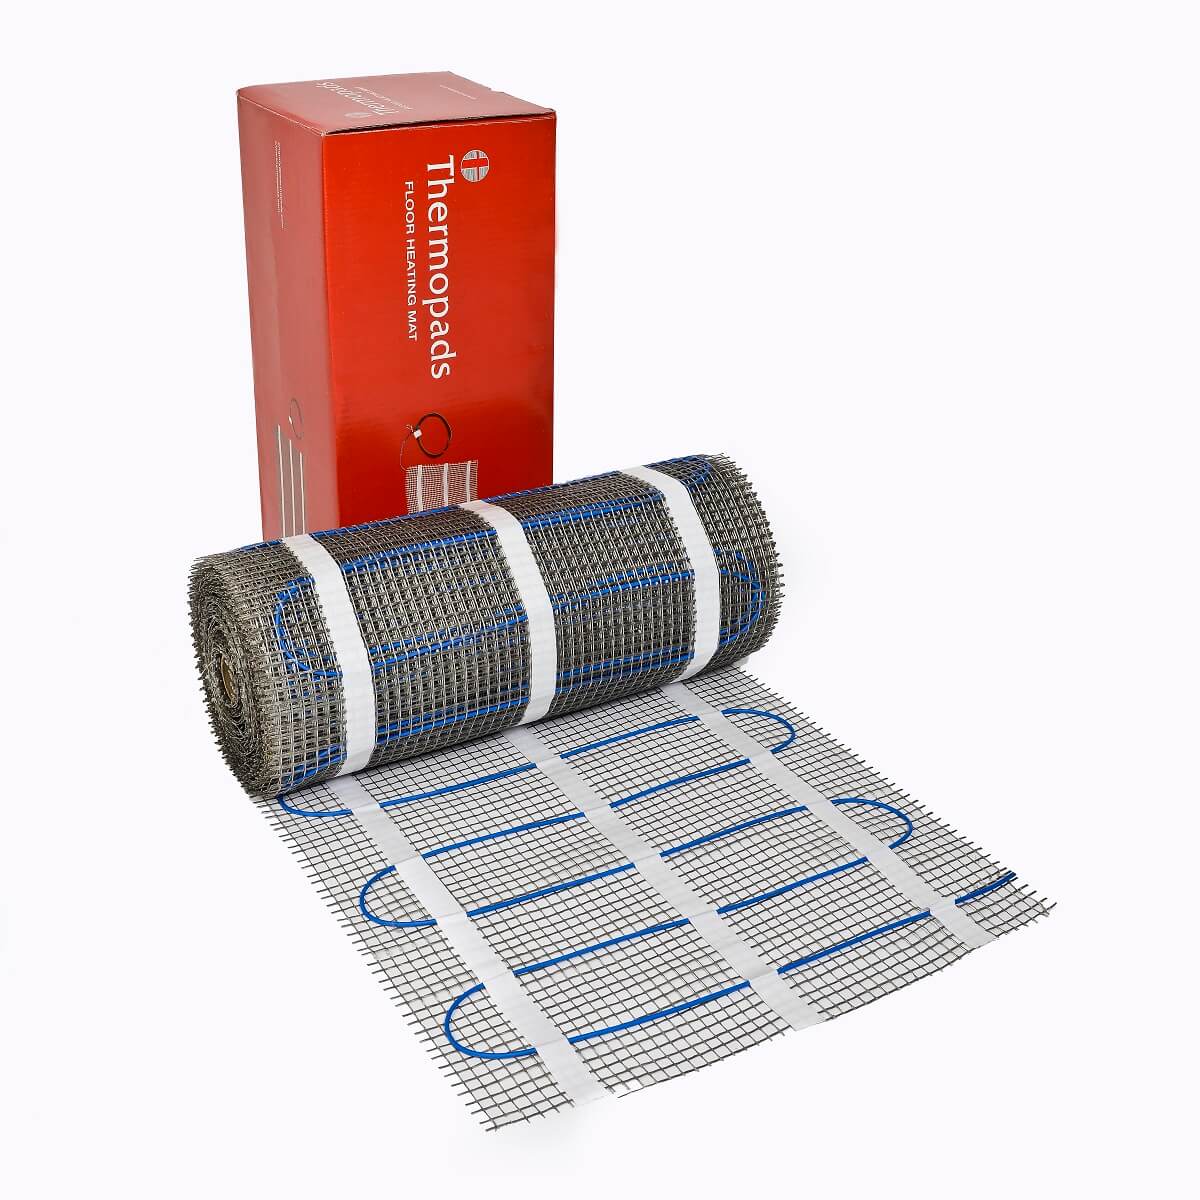 Thermopads Undertile Heating Mat - 1.5m2 300W (11172)